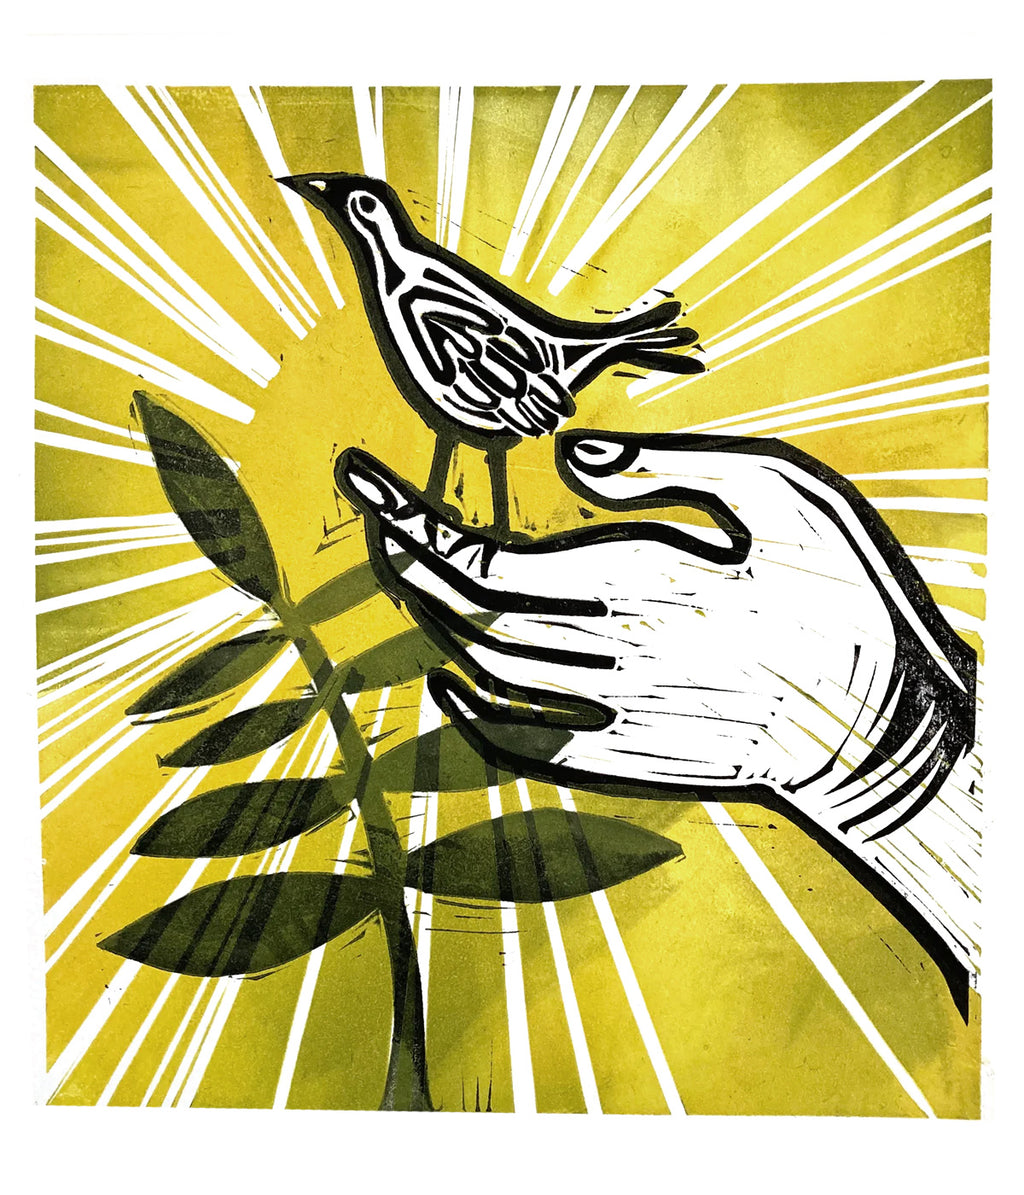 Hand and Bird, linocut print by Sarah Kirby